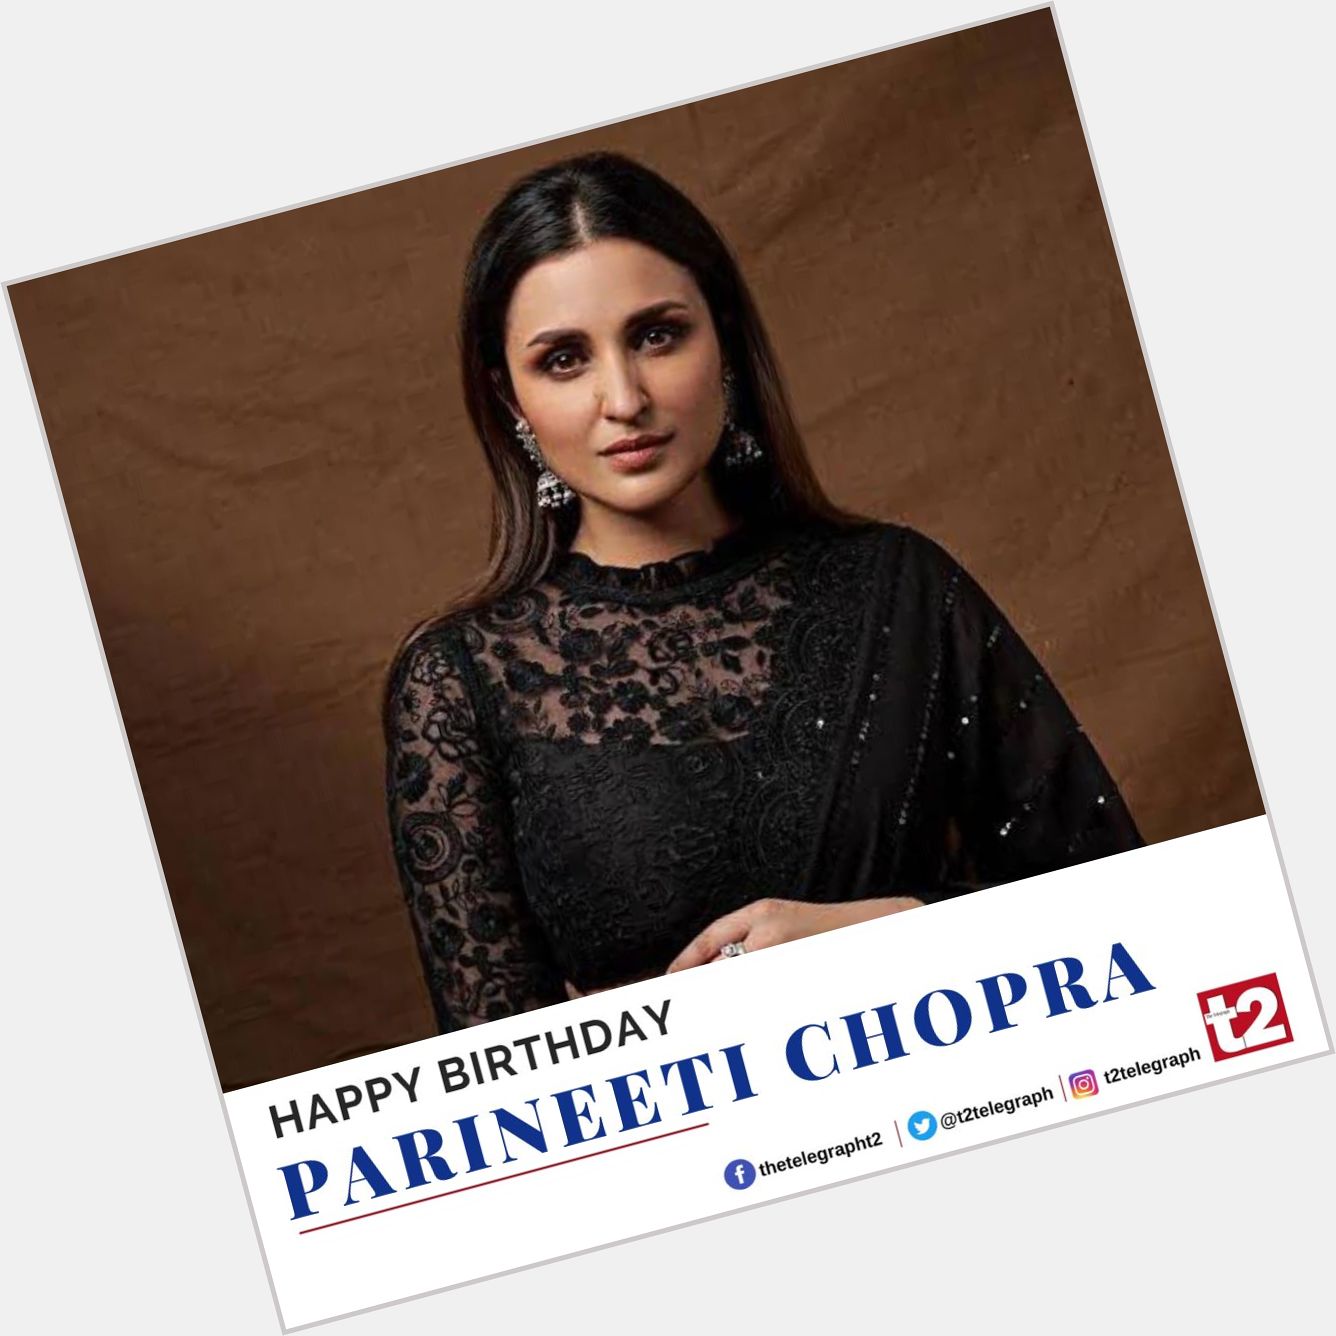 T2 wishes the fun and fab Parineeti Chopra a very happy birthday 